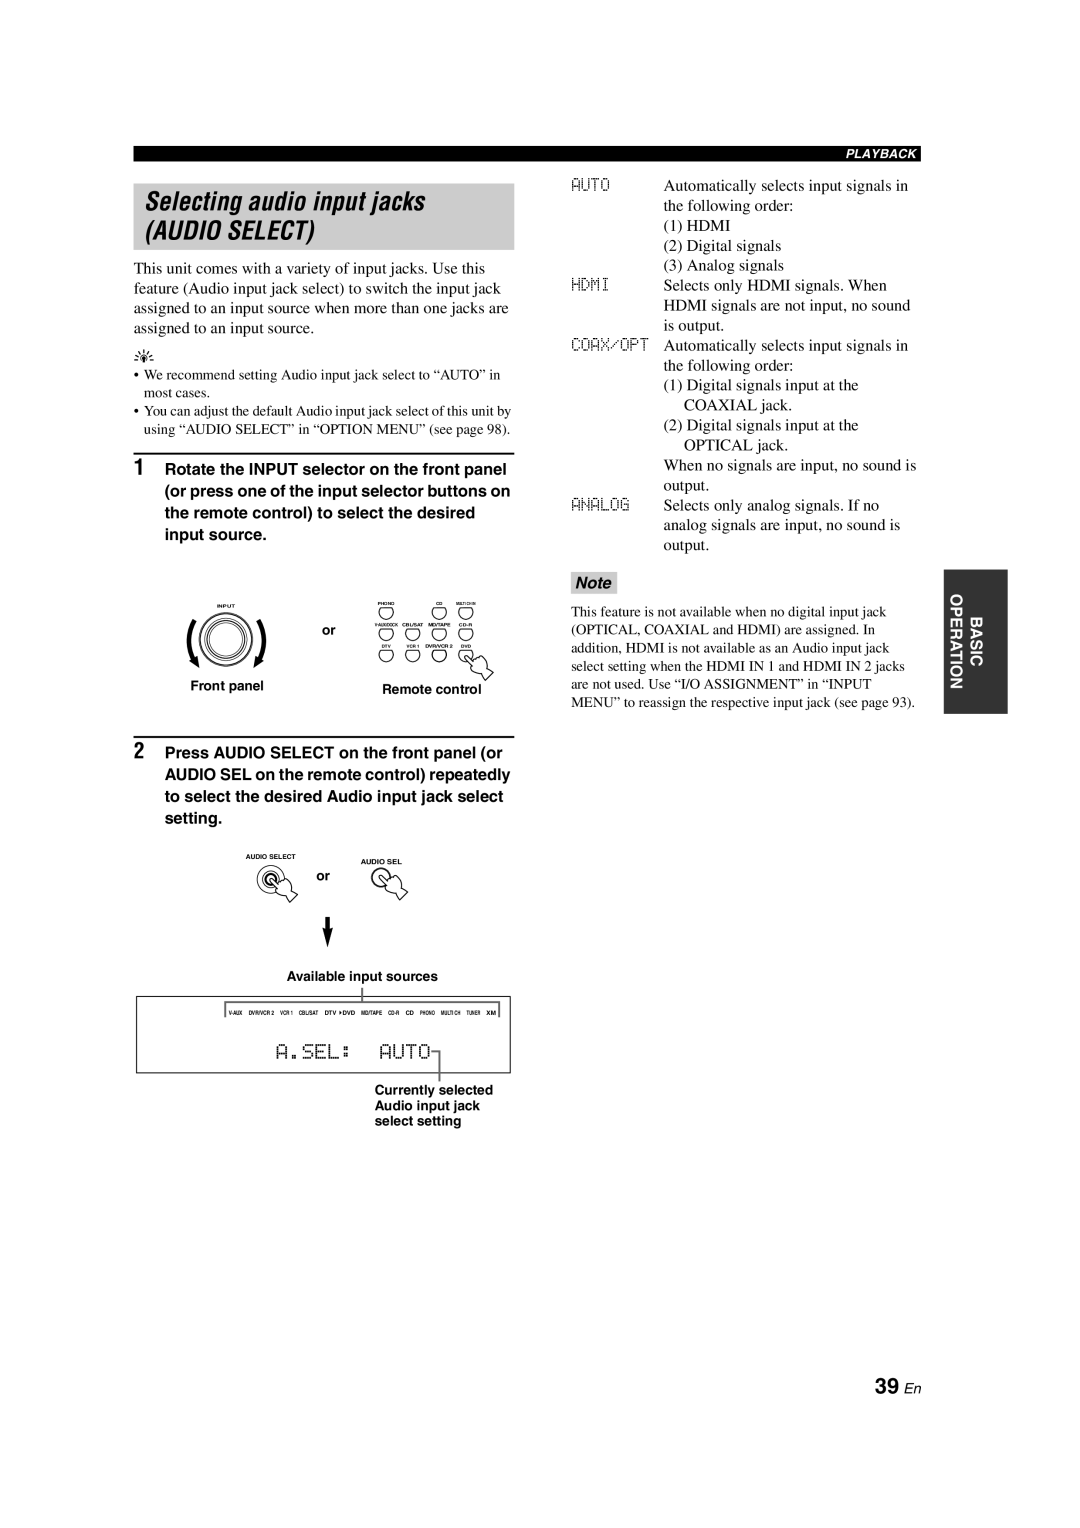 Yamaha HTR-6090 owner manual Selecting audio input jacks AUDIO SELECT, 39 En, A.Sel: Auto 